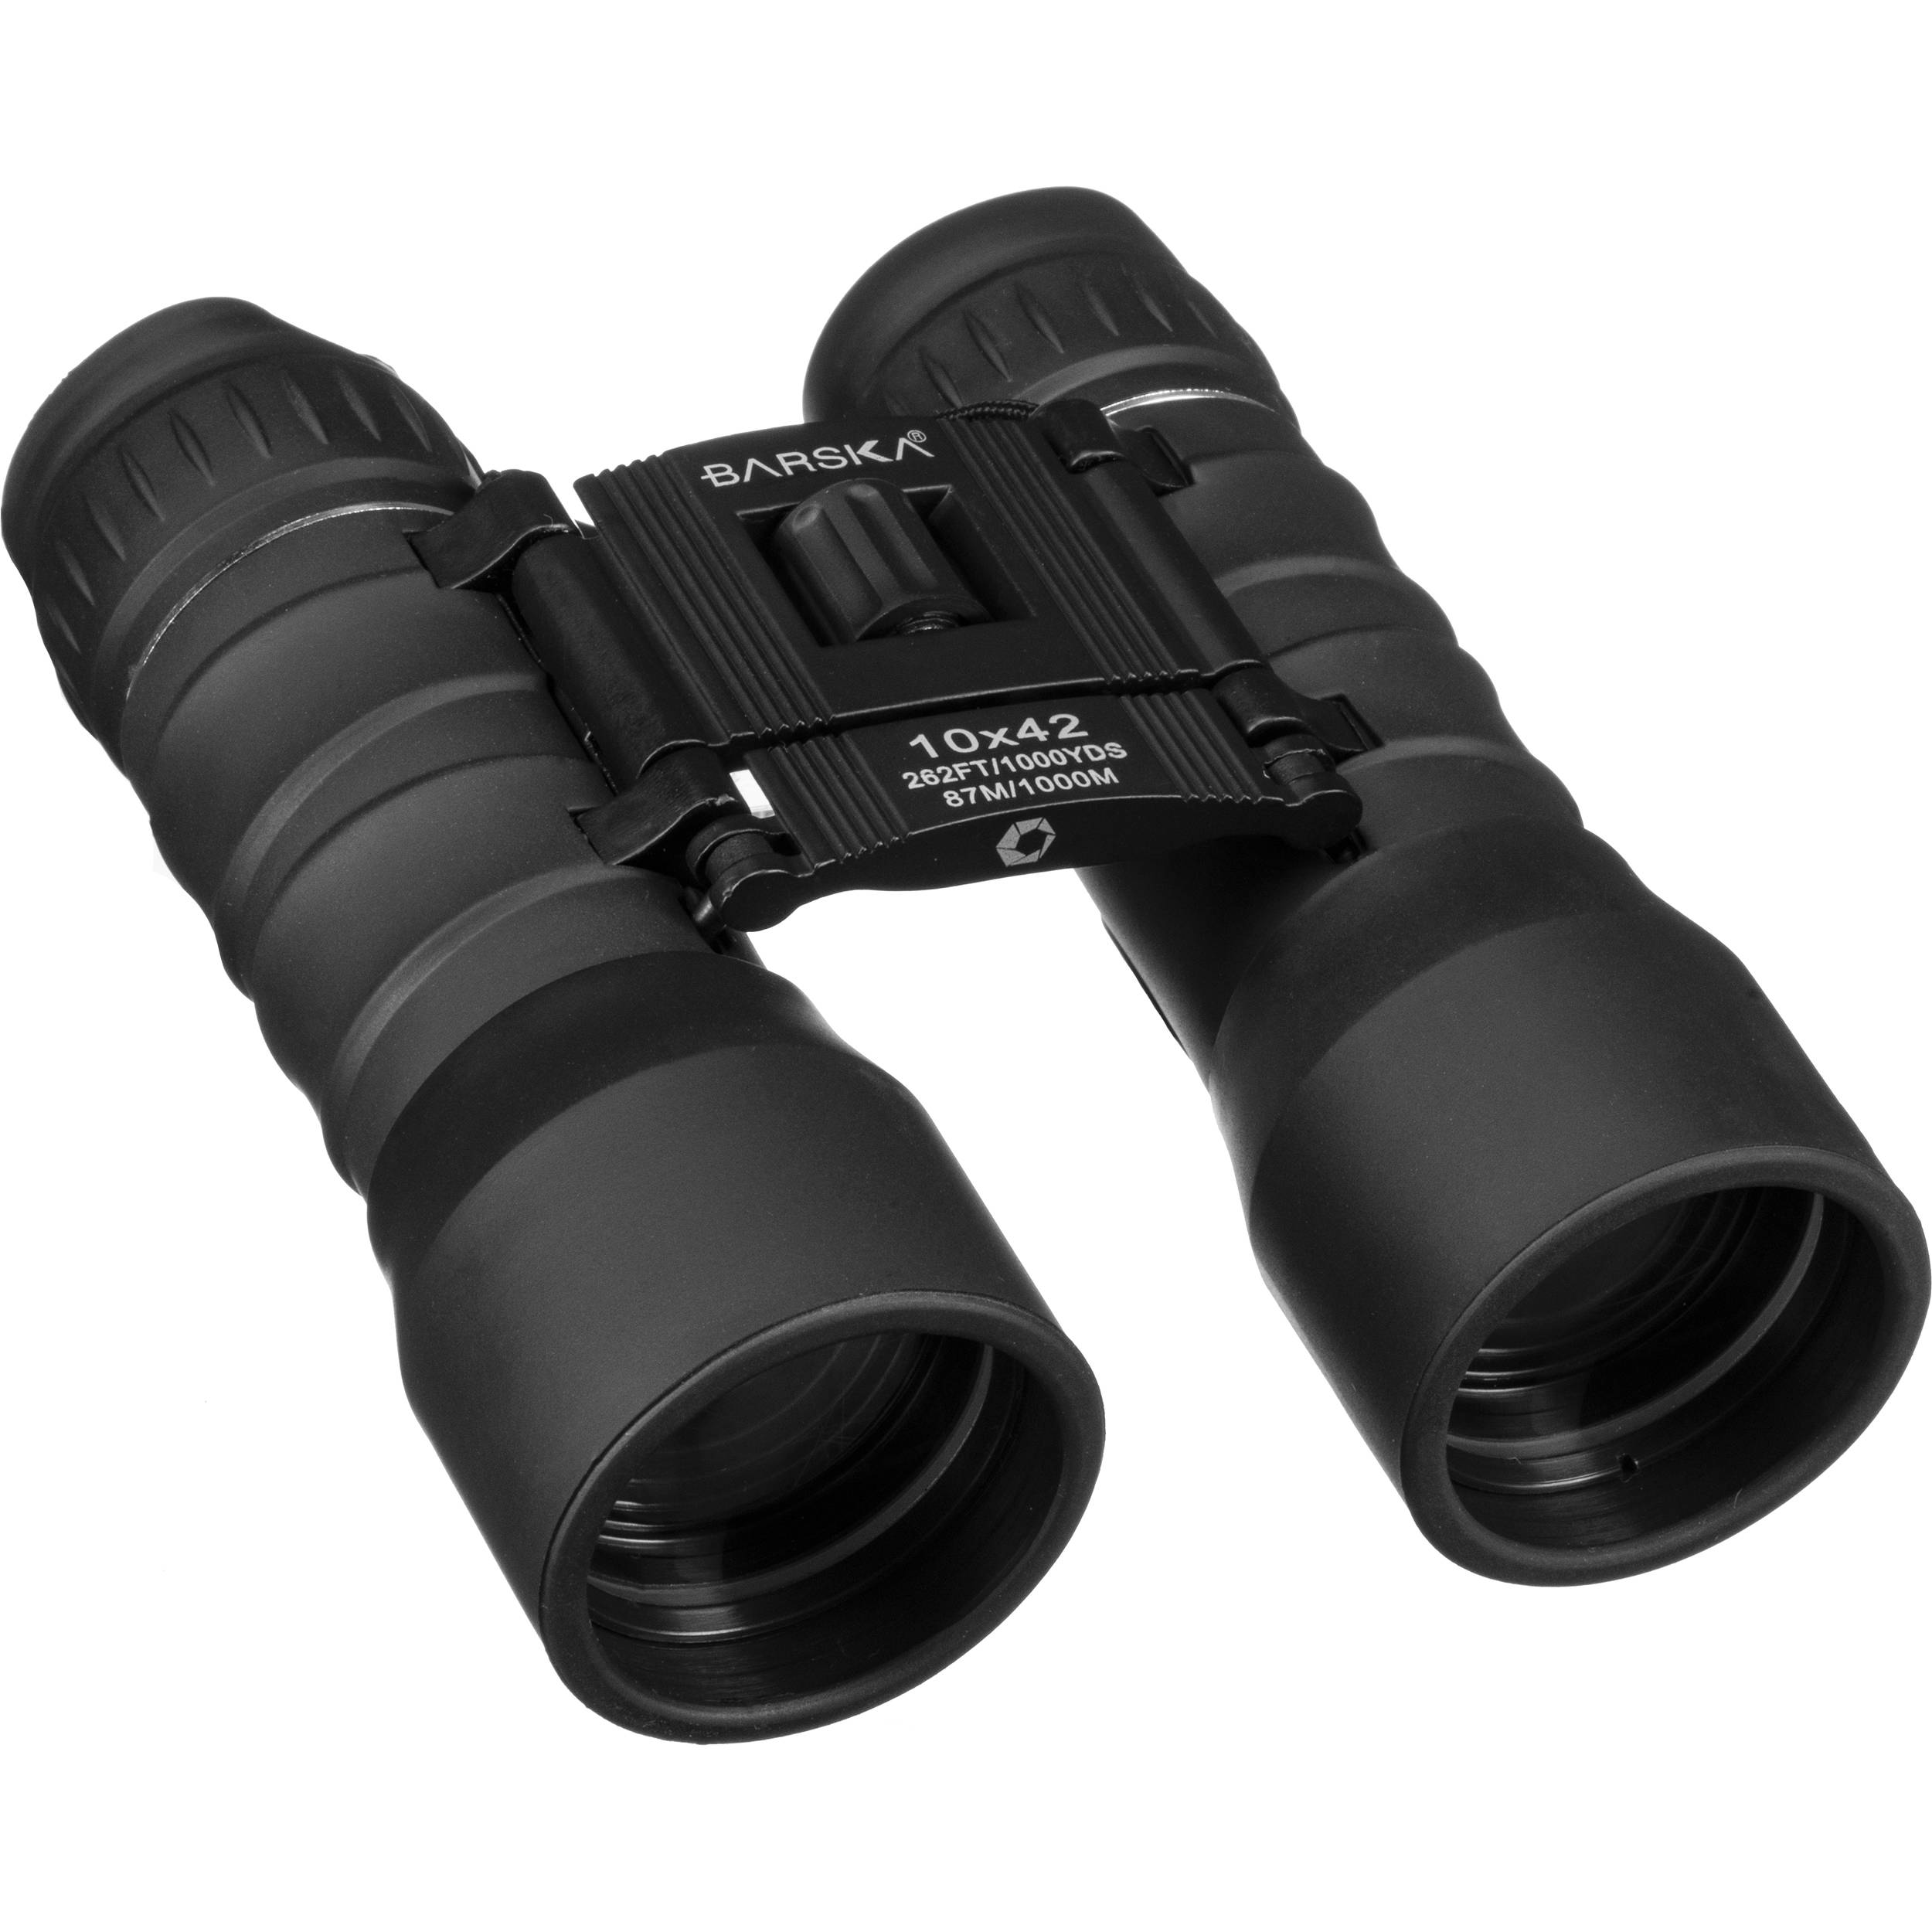 Photo 1 of Barska 10x42 Lucid View Binoculars (Black)